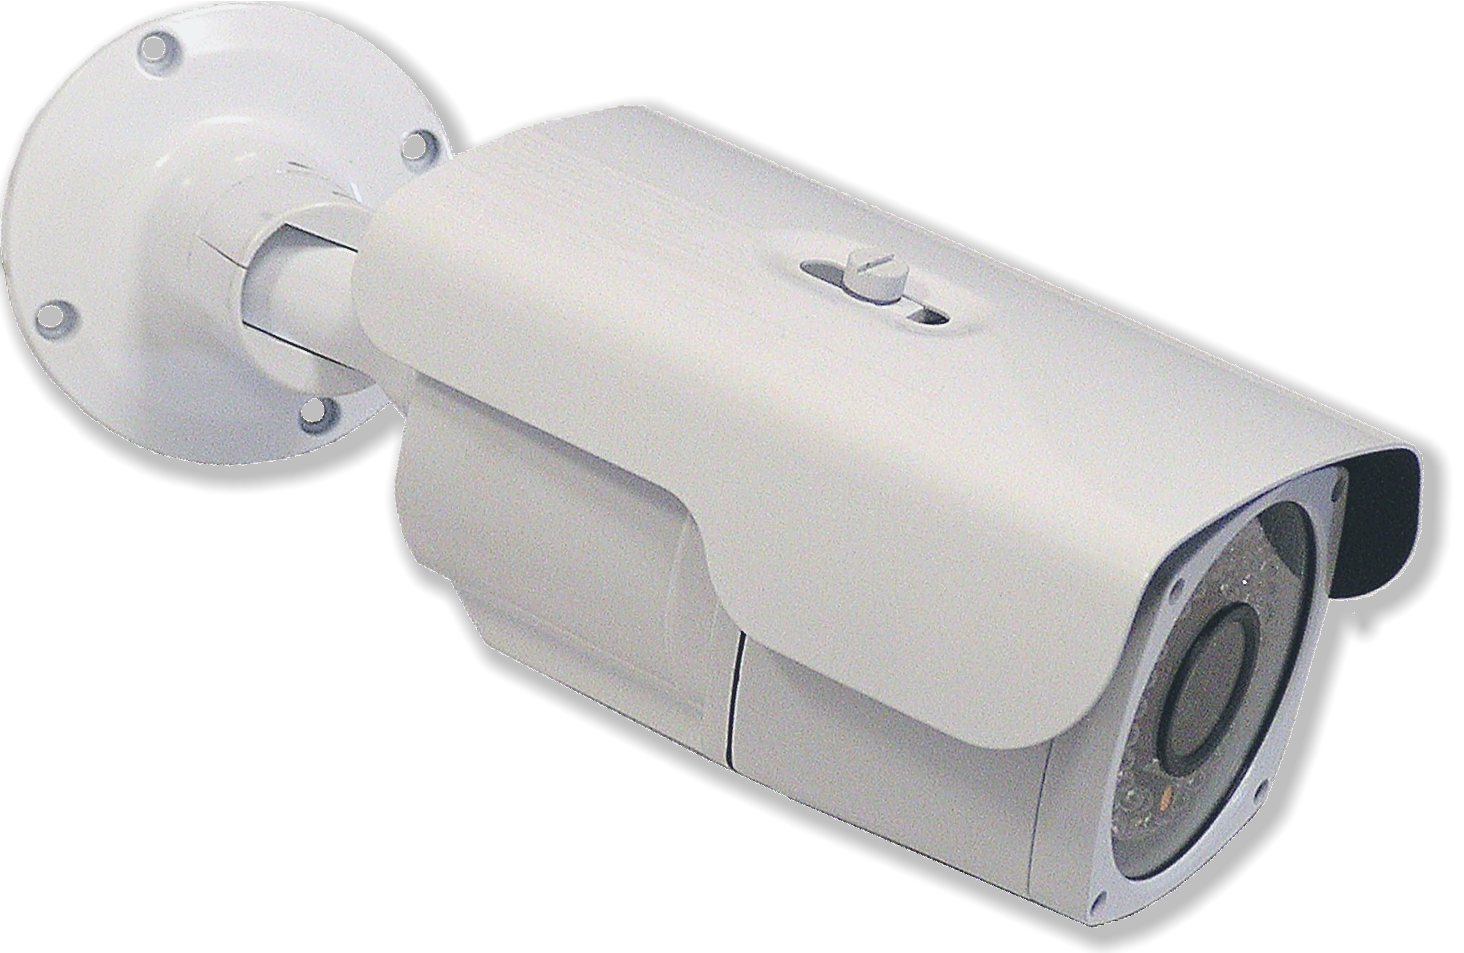 DN-F198D-2812: Уличная AHD-H камера видеонаблюдения 1080P. Сенсор Sony Exmor NIR